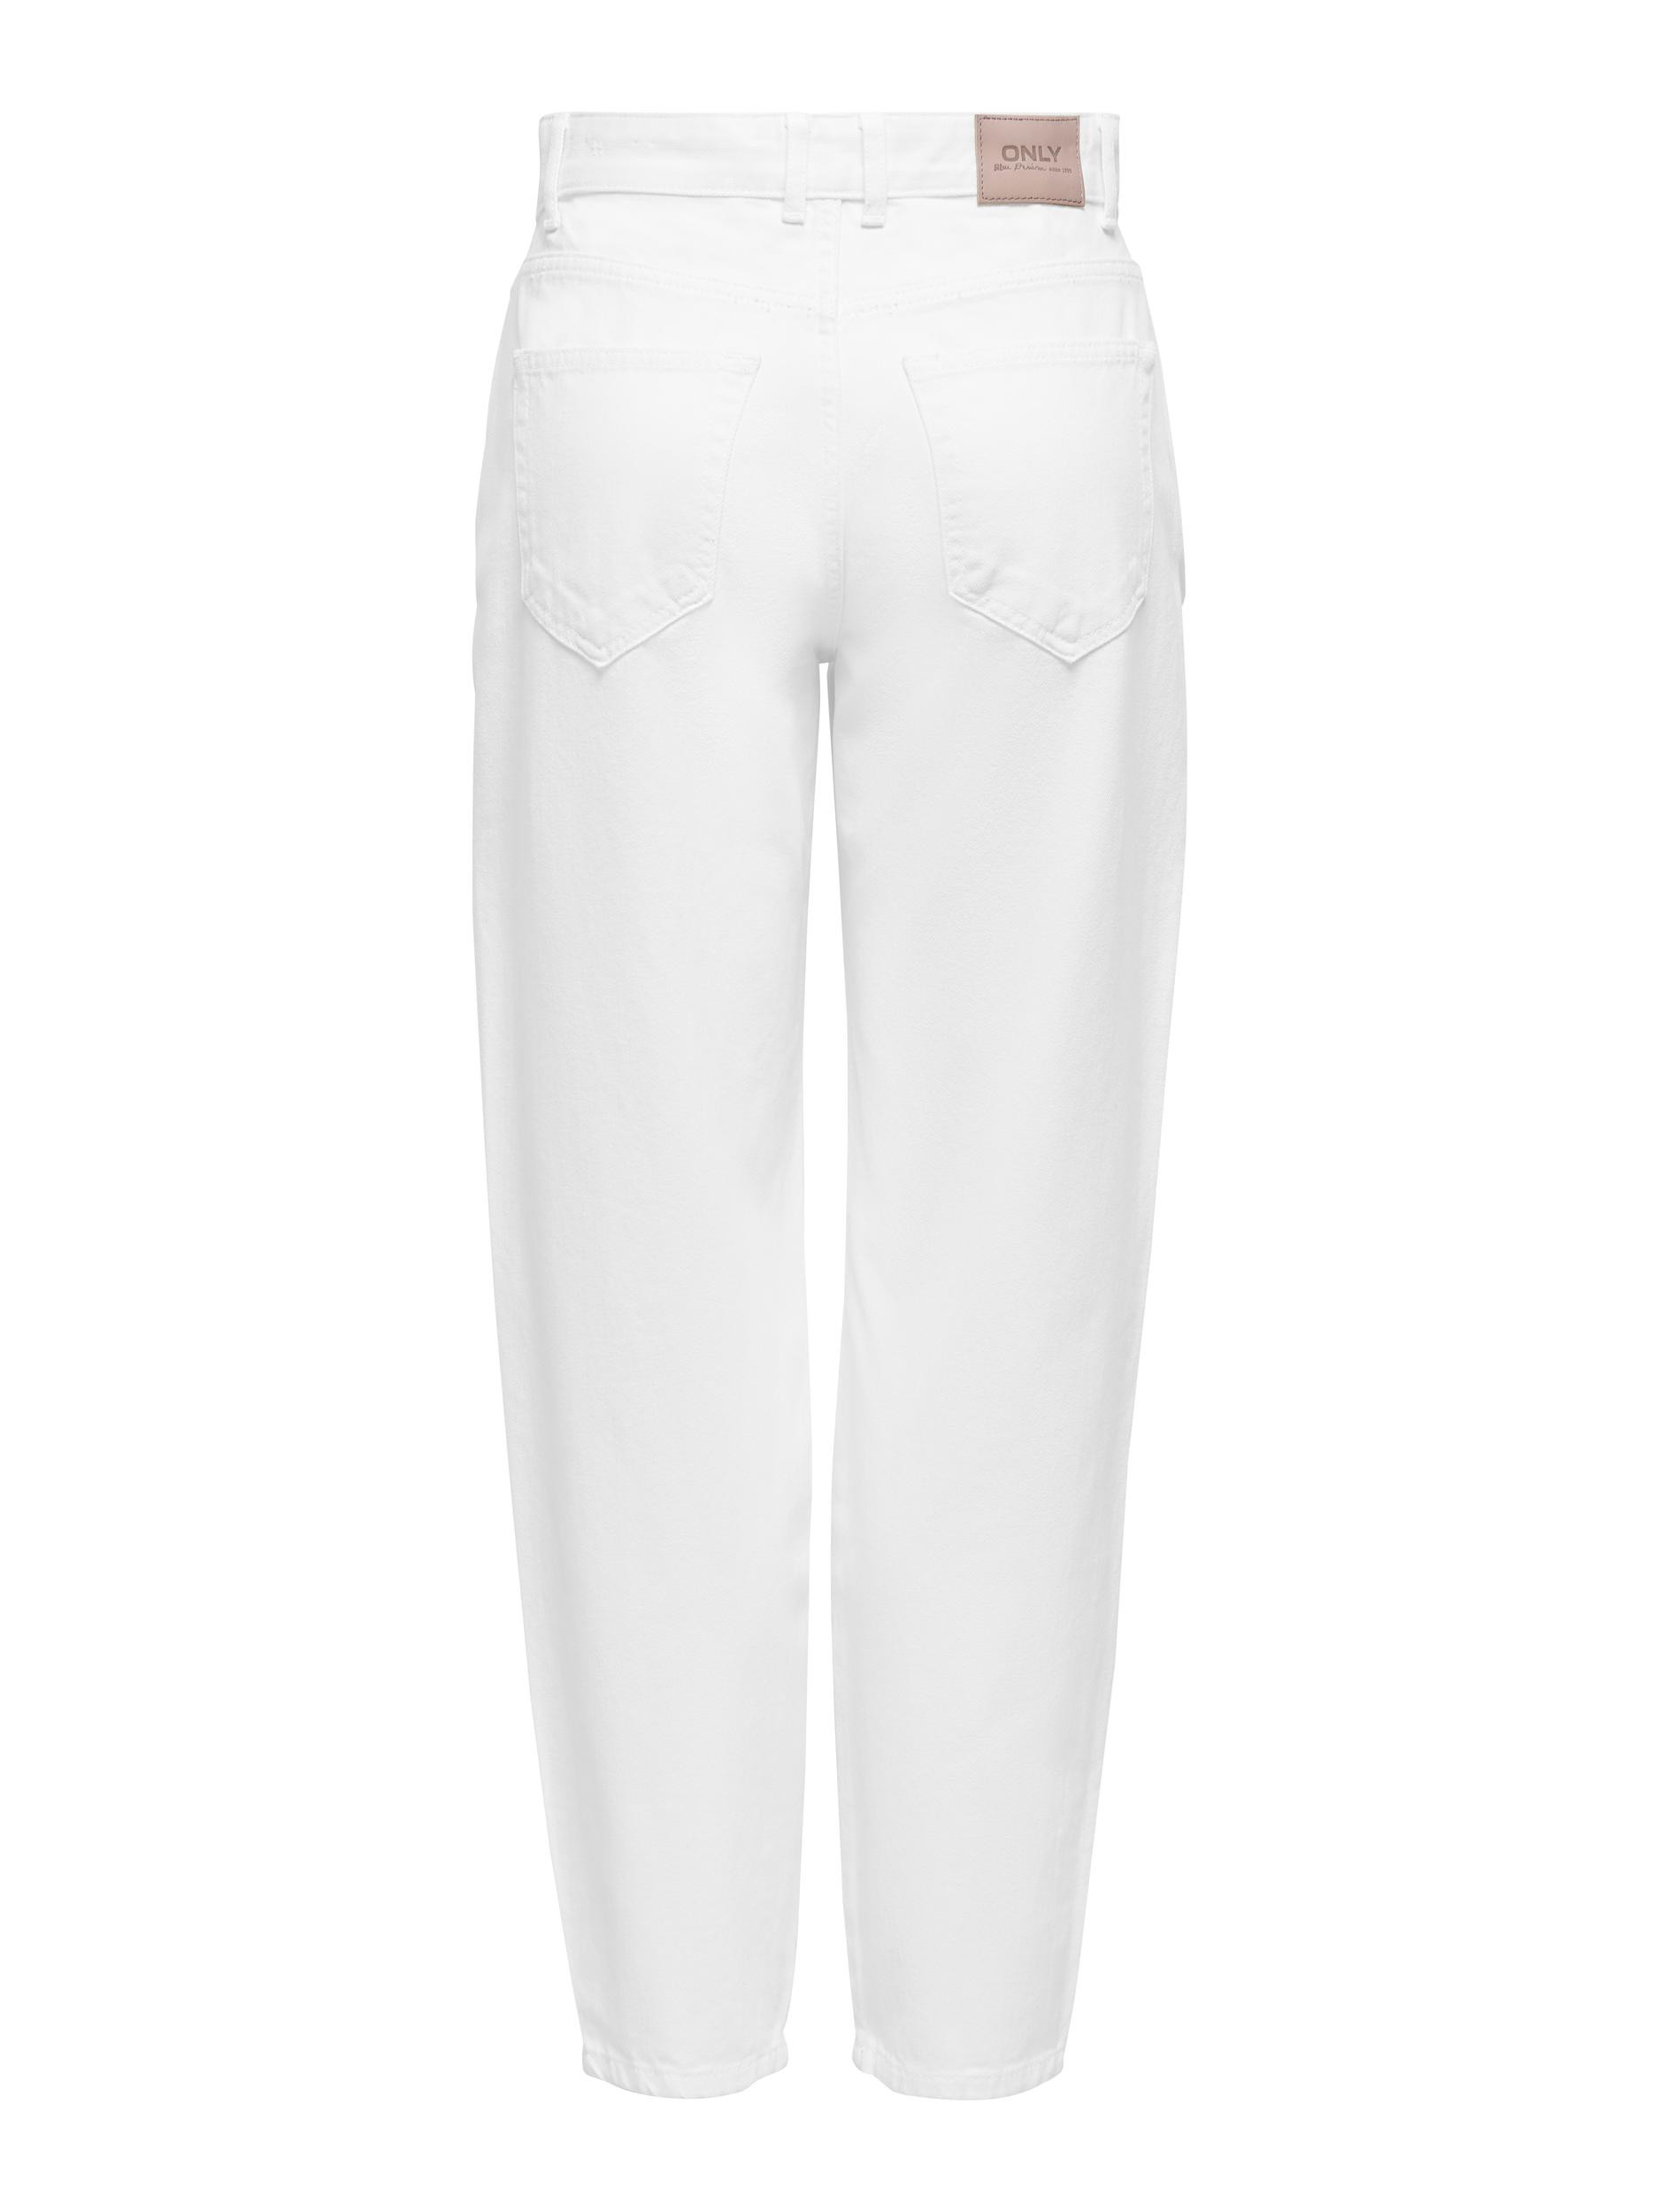 Jeans 5 tasche, Bianco, large image number 1